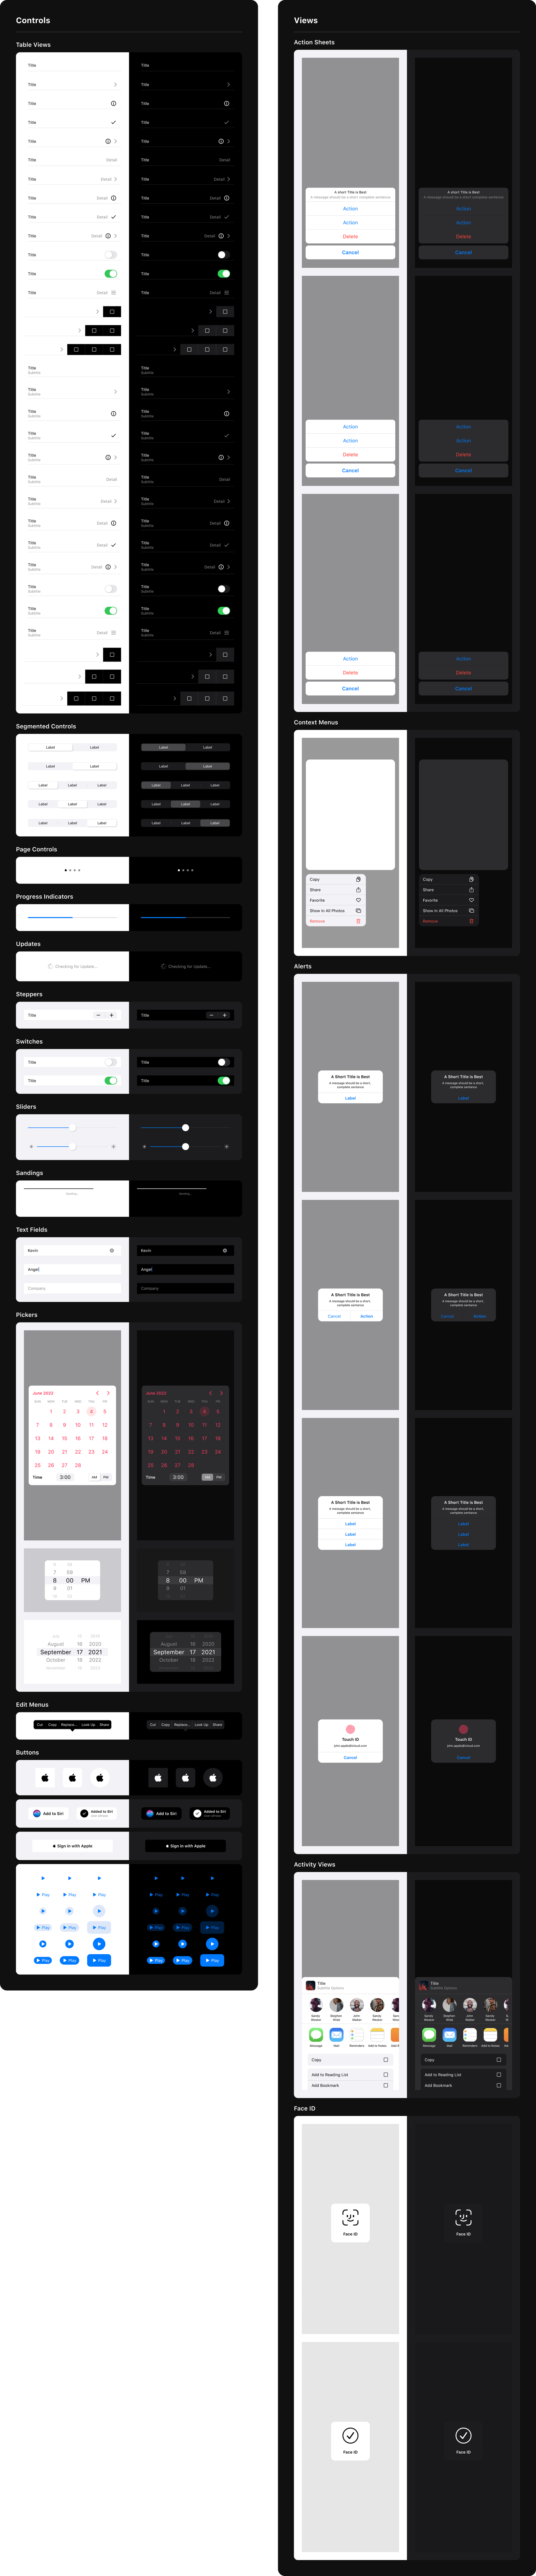 iOS/iPadOS/WatchOS App UI组件素材下载：提升您的移动应用设计质量 figma格式-UI/UX-到位啦UI